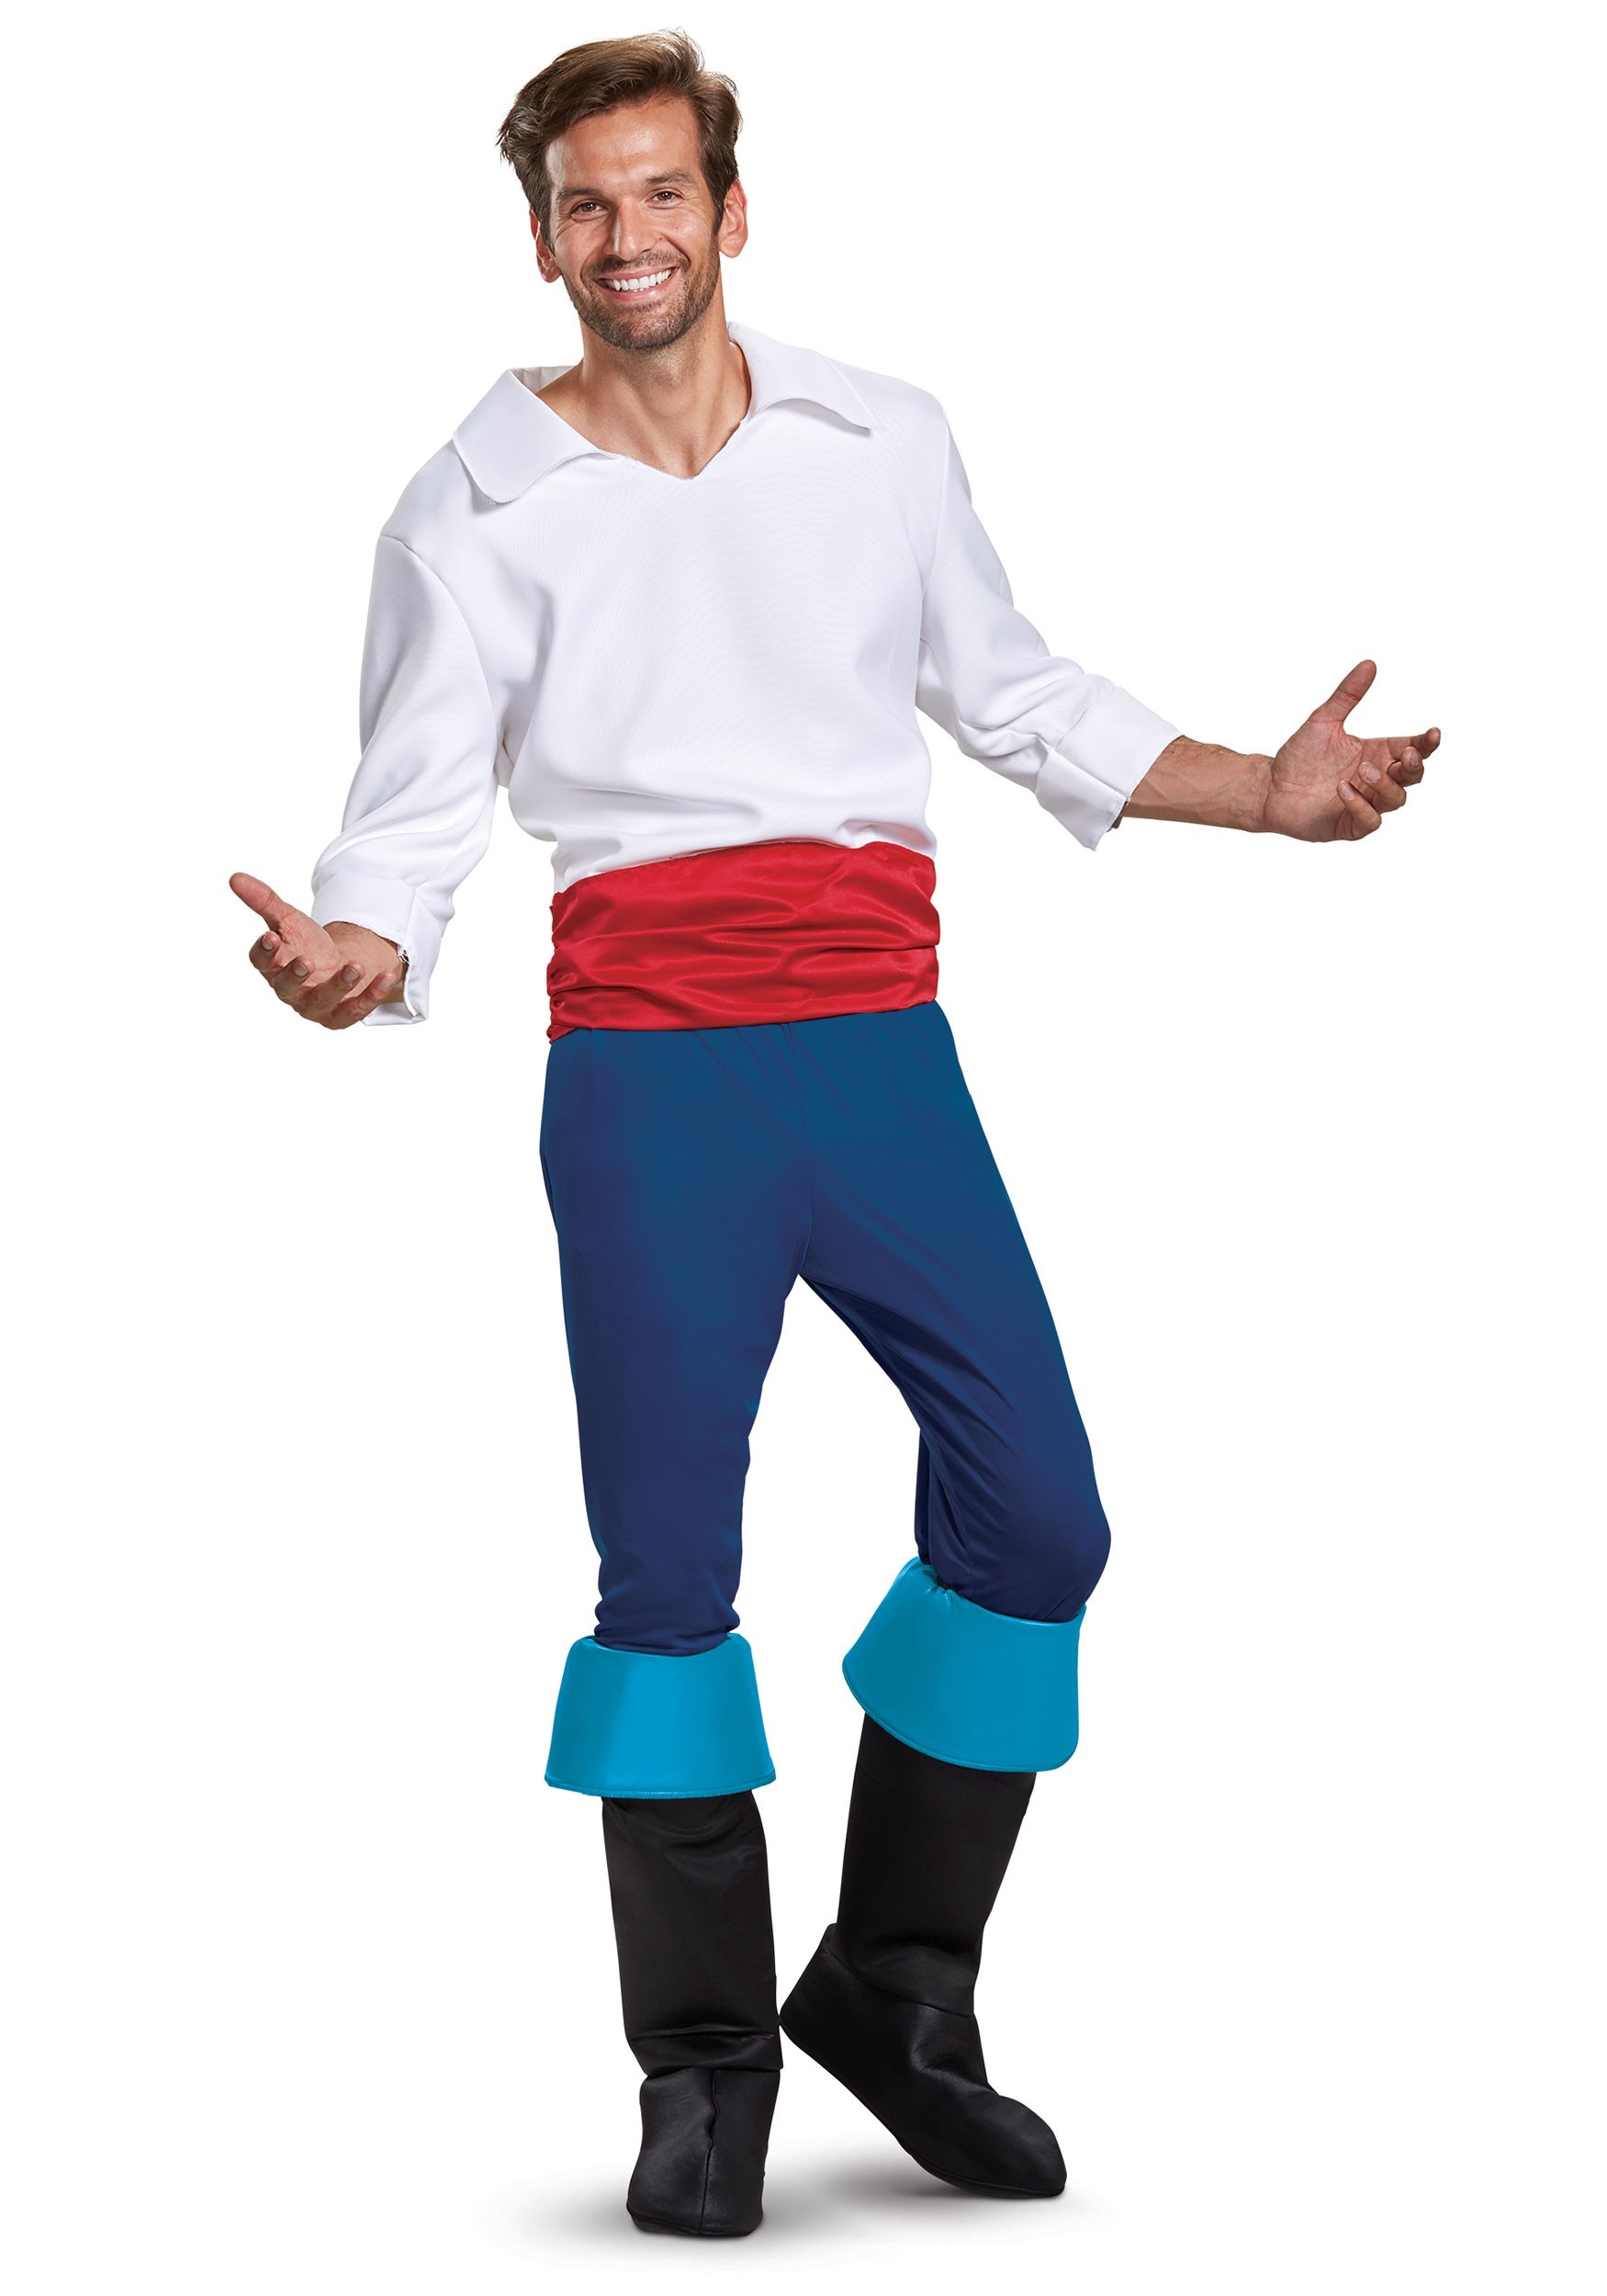 Disney Prince Eric Deluxe Men's Costume - image 1 of 11